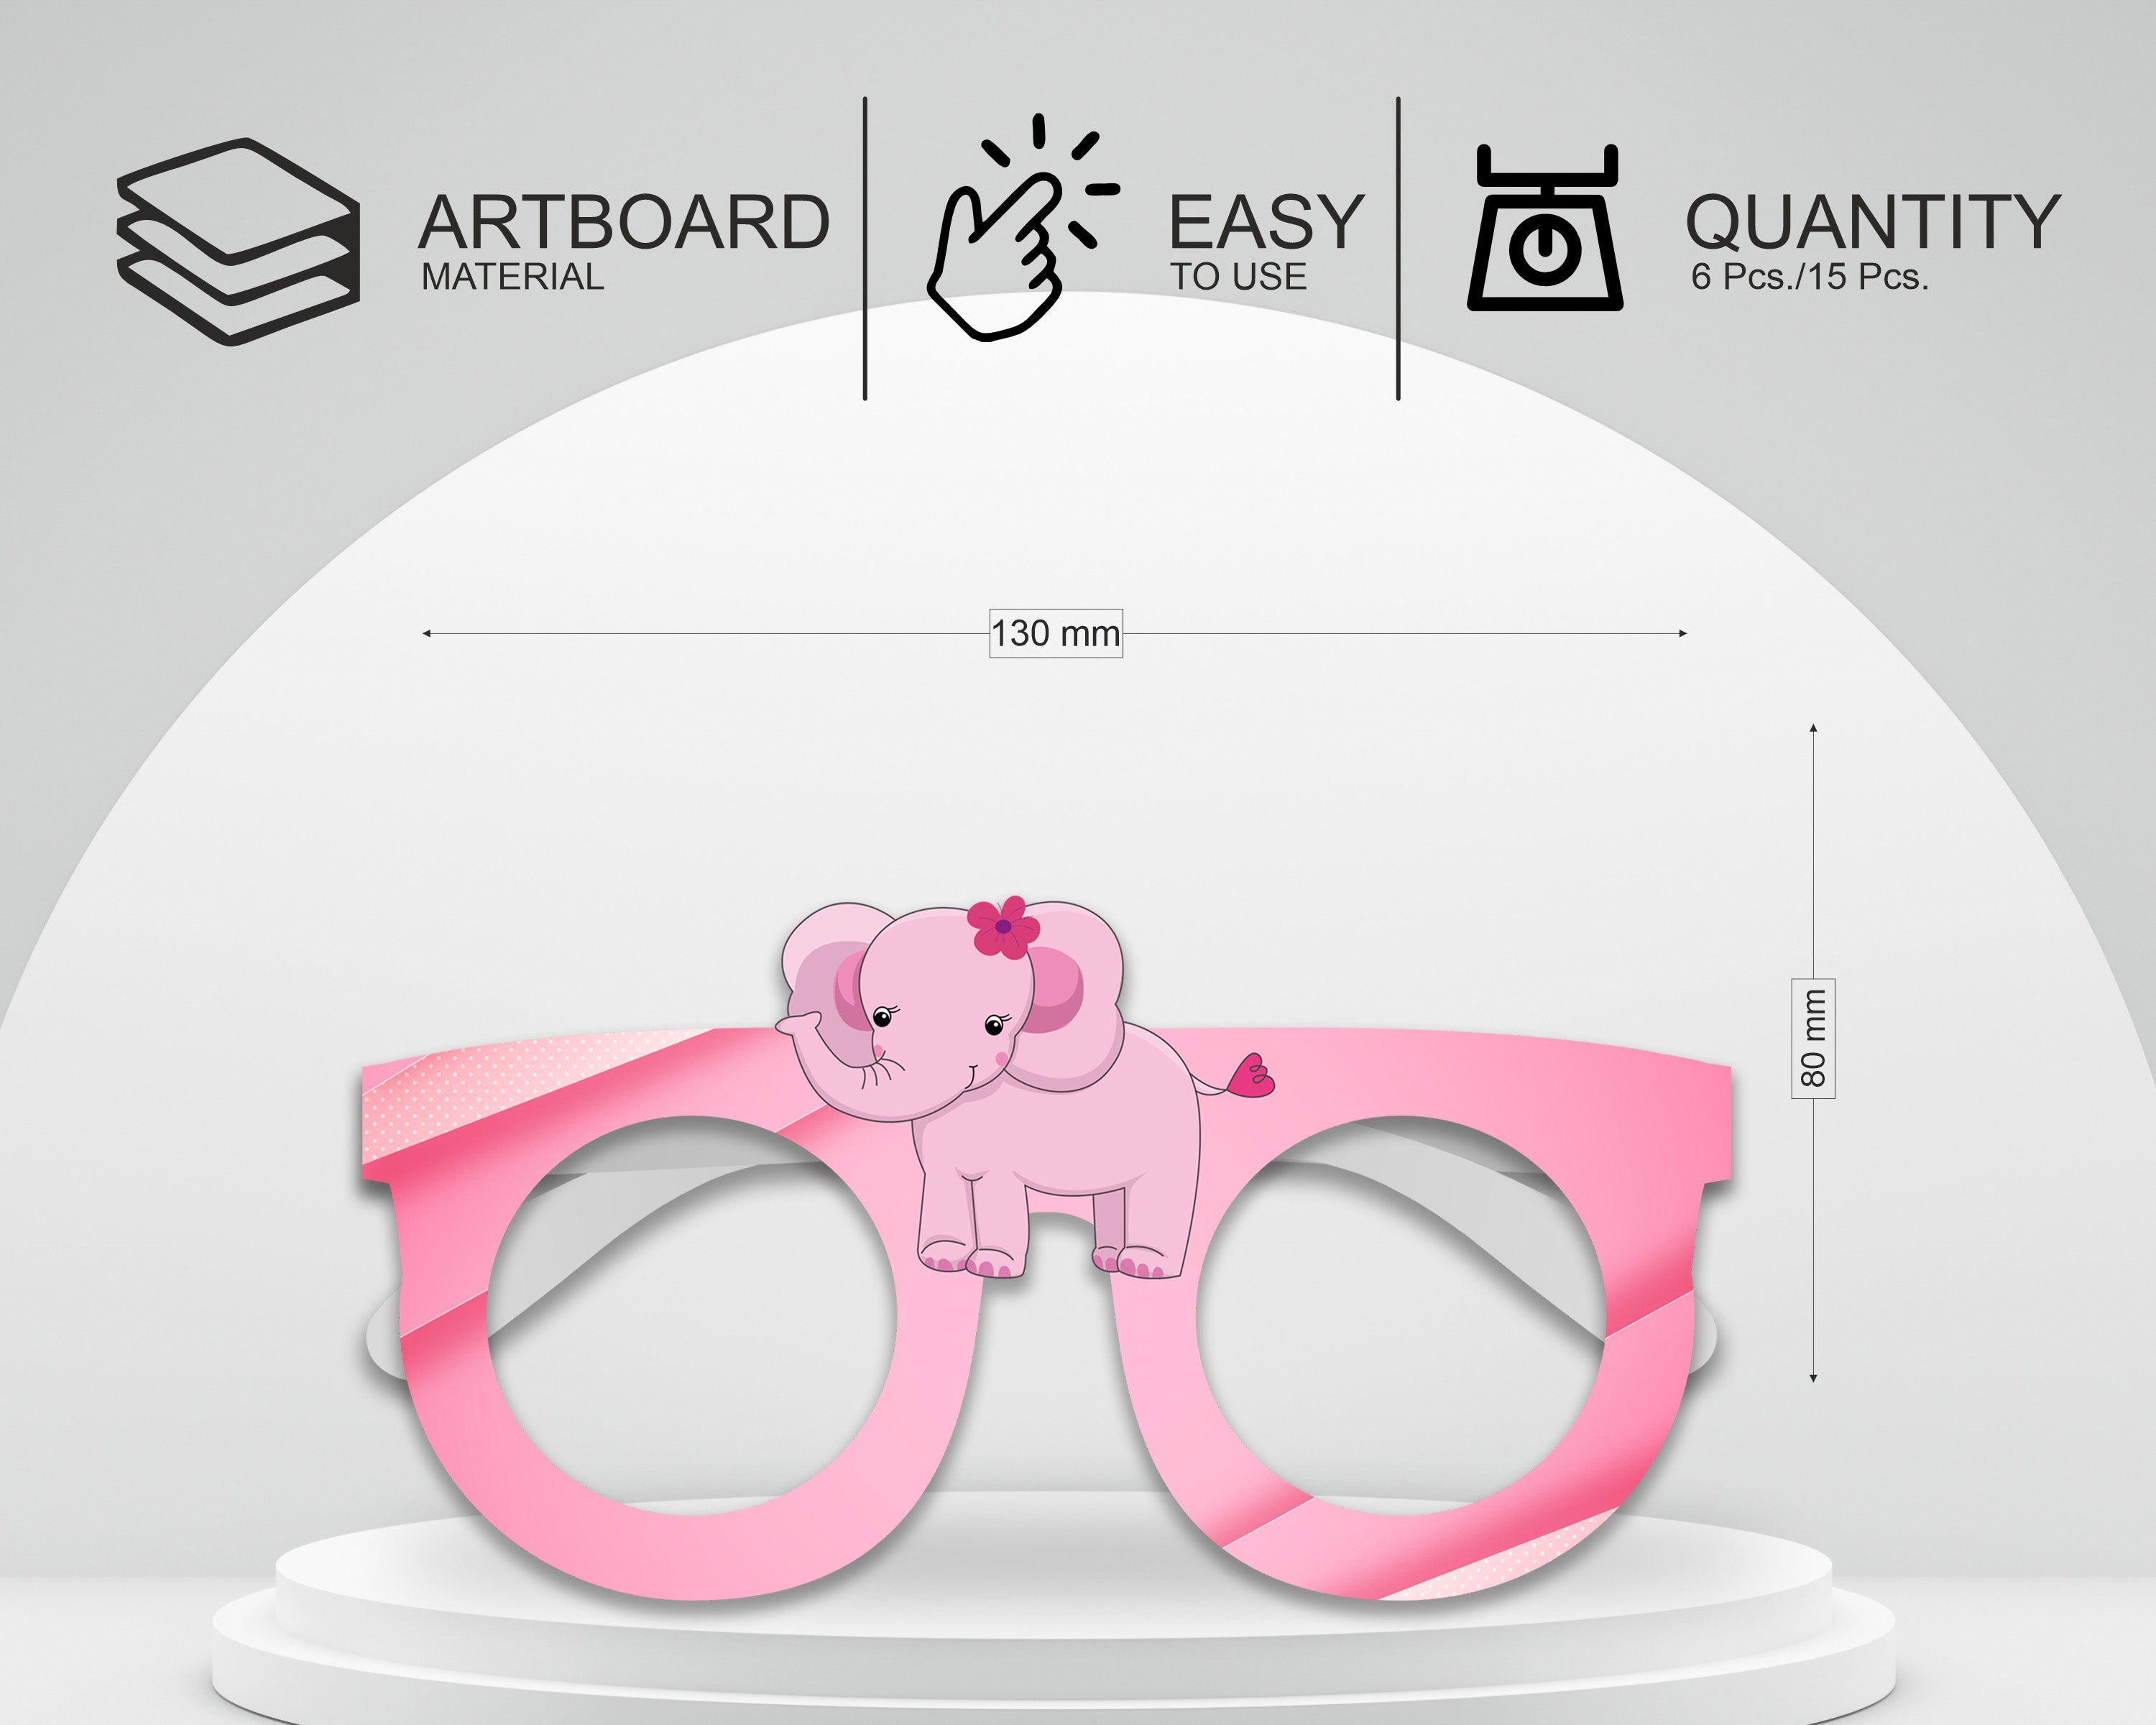 PSI Pink Elephant  theme Birthday Party glasses